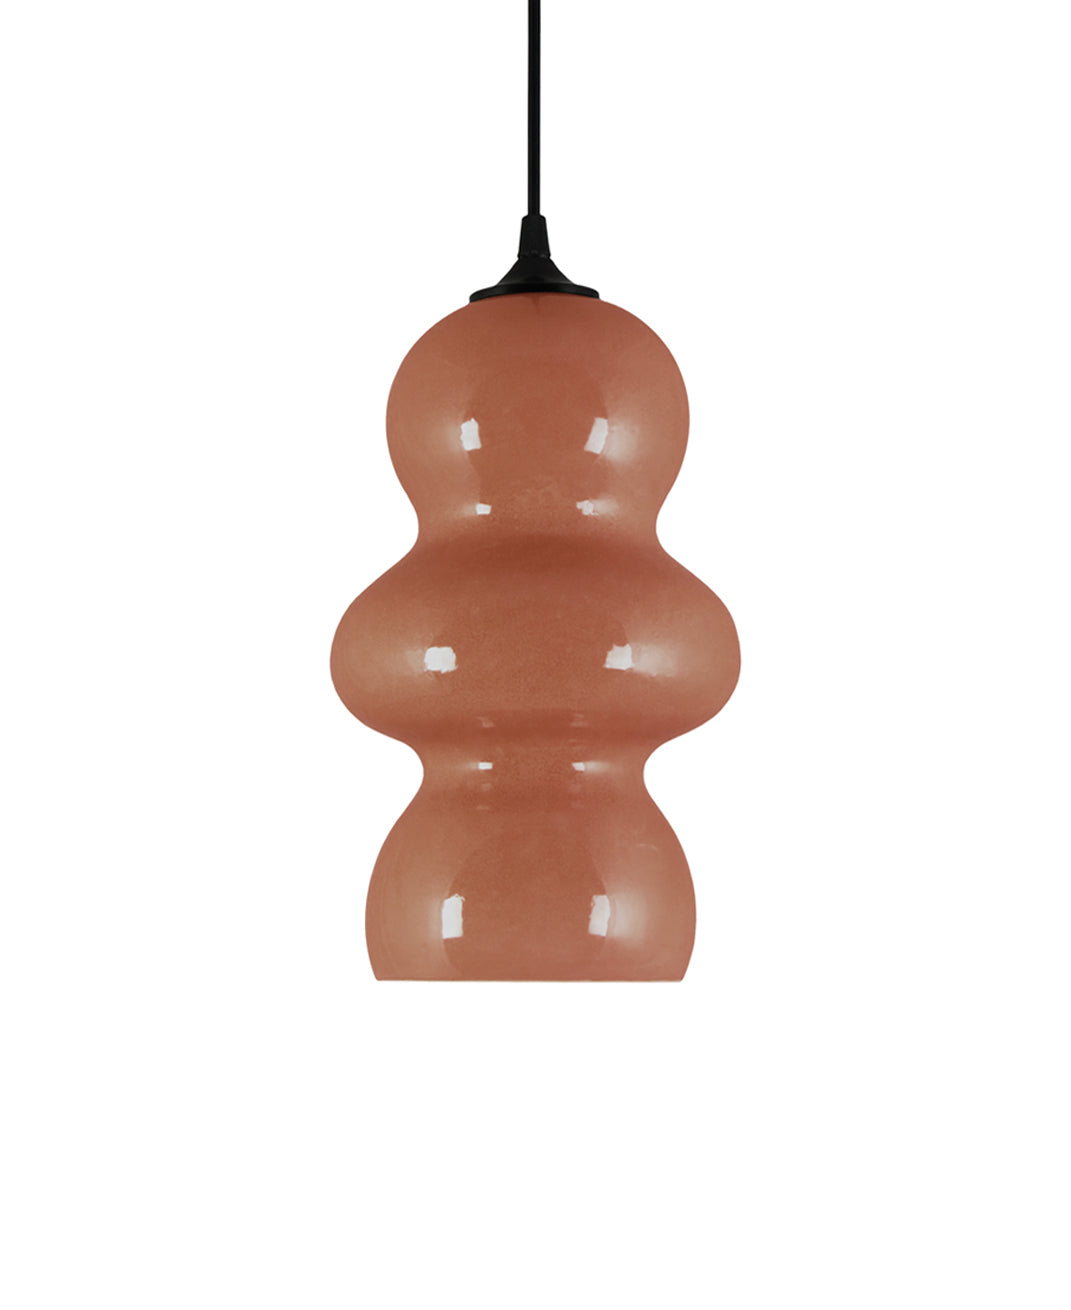 curvesome modern ceramic pendant lamp in cheeful warm chocolate brown